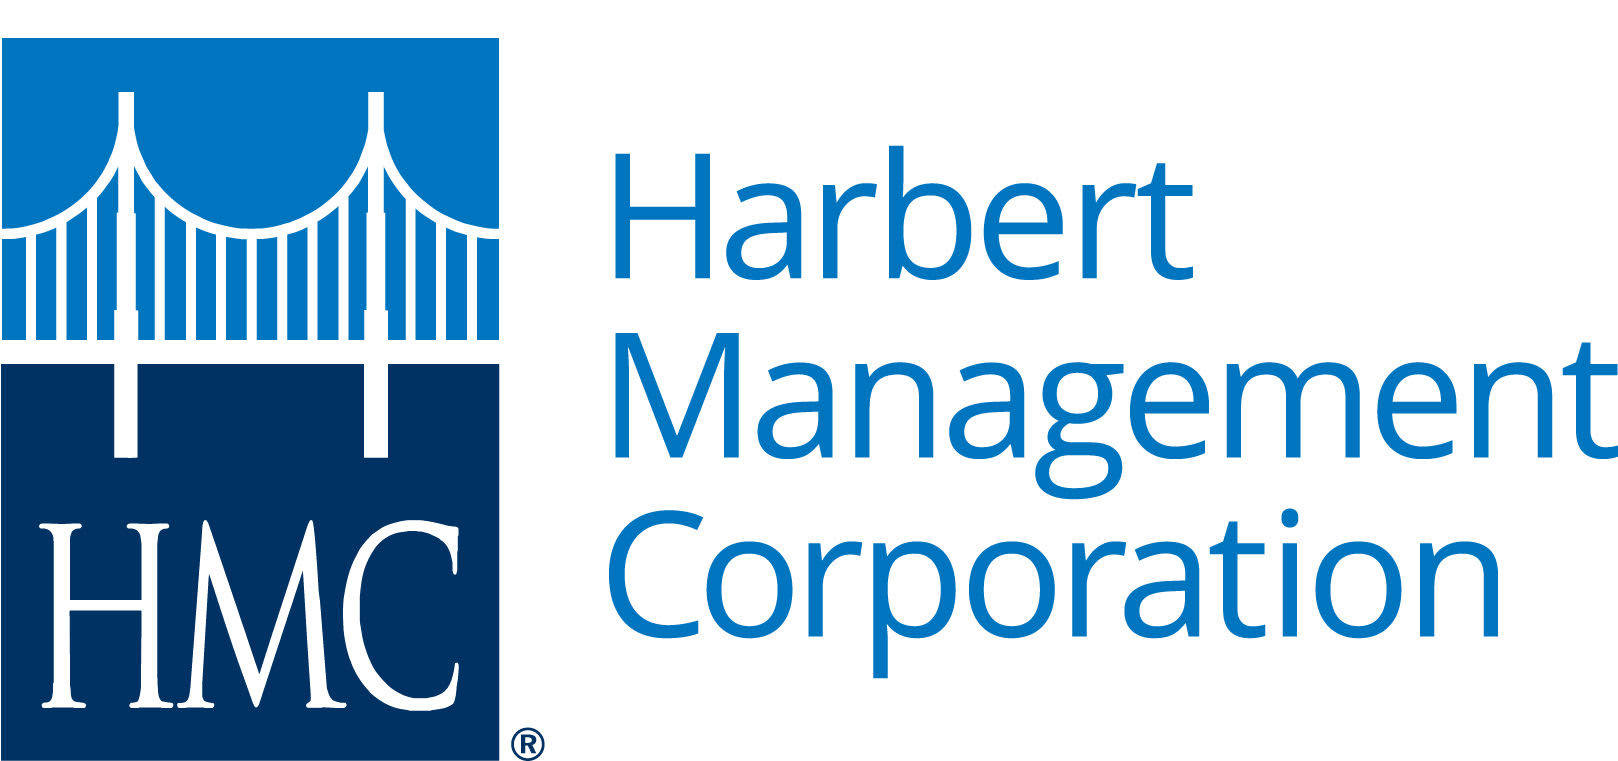 Harbert Management